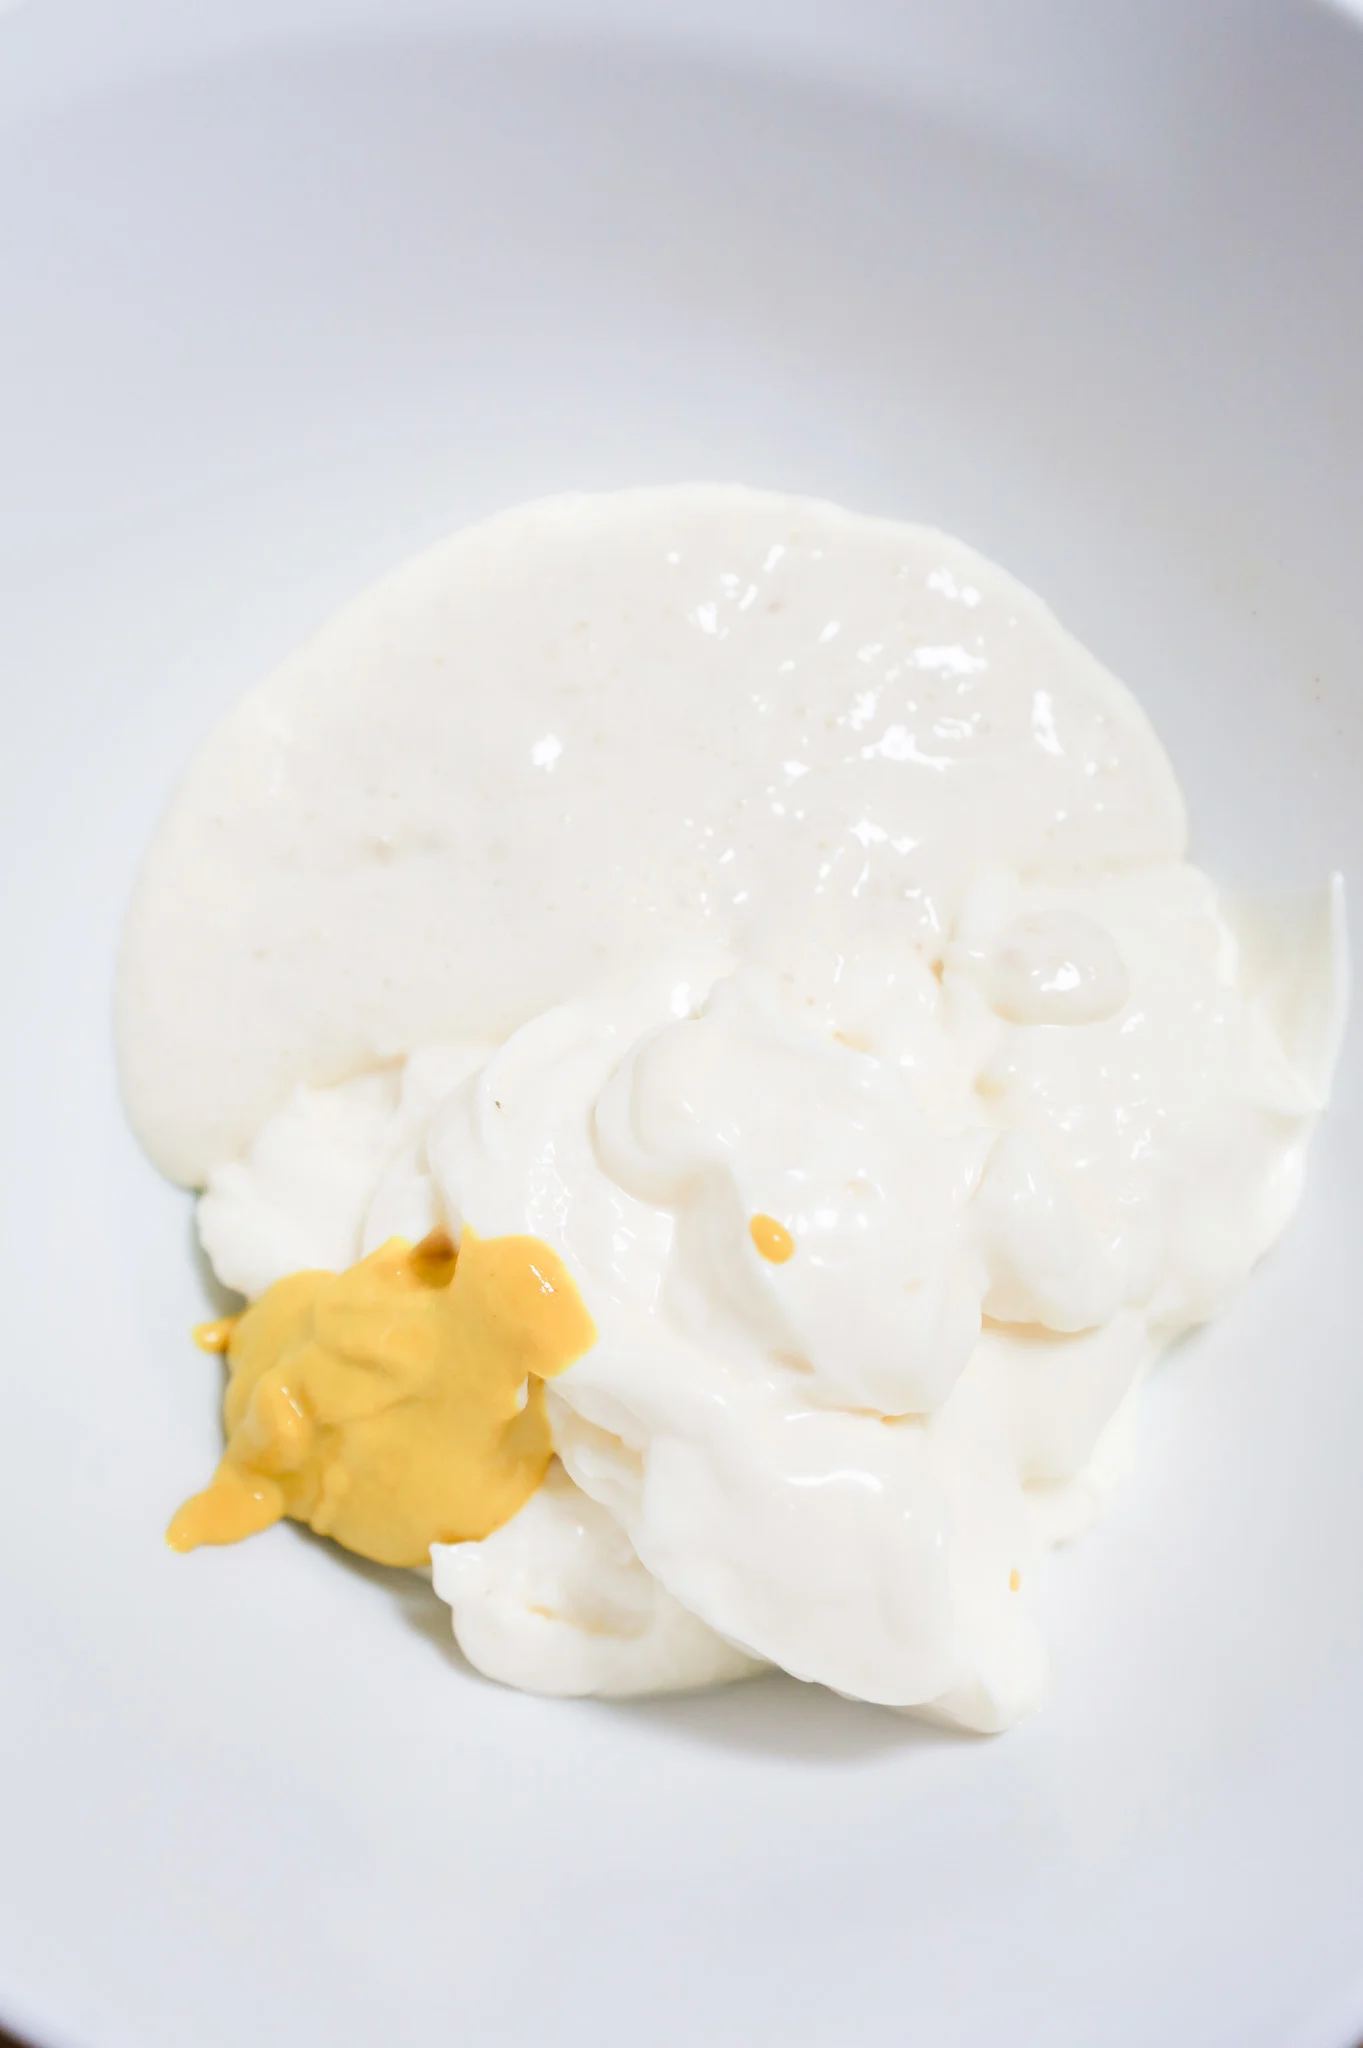 mustard, horseradish sauce and mayo in a mixing bowl